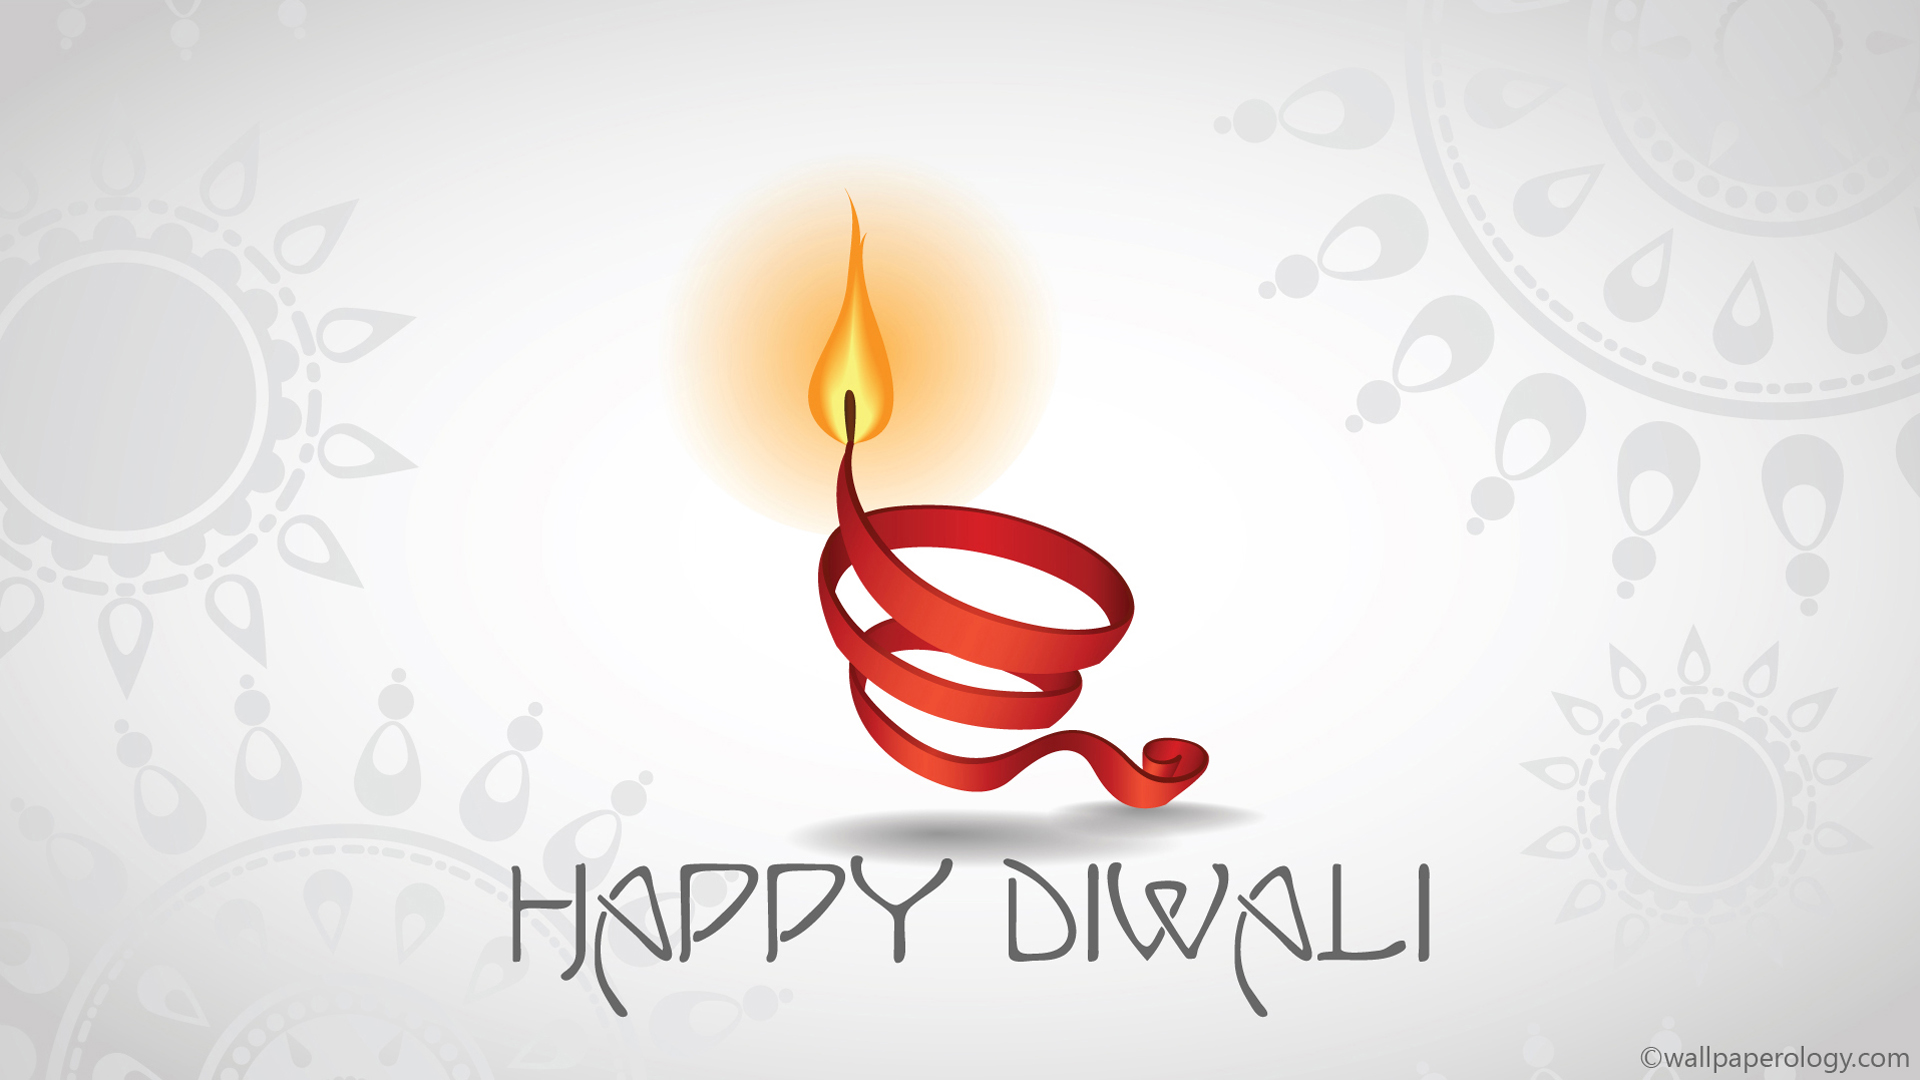 Happy Diwali Wallpaper - Creative Happy Diwali Wishes - 1920x1080 Wallpaper  